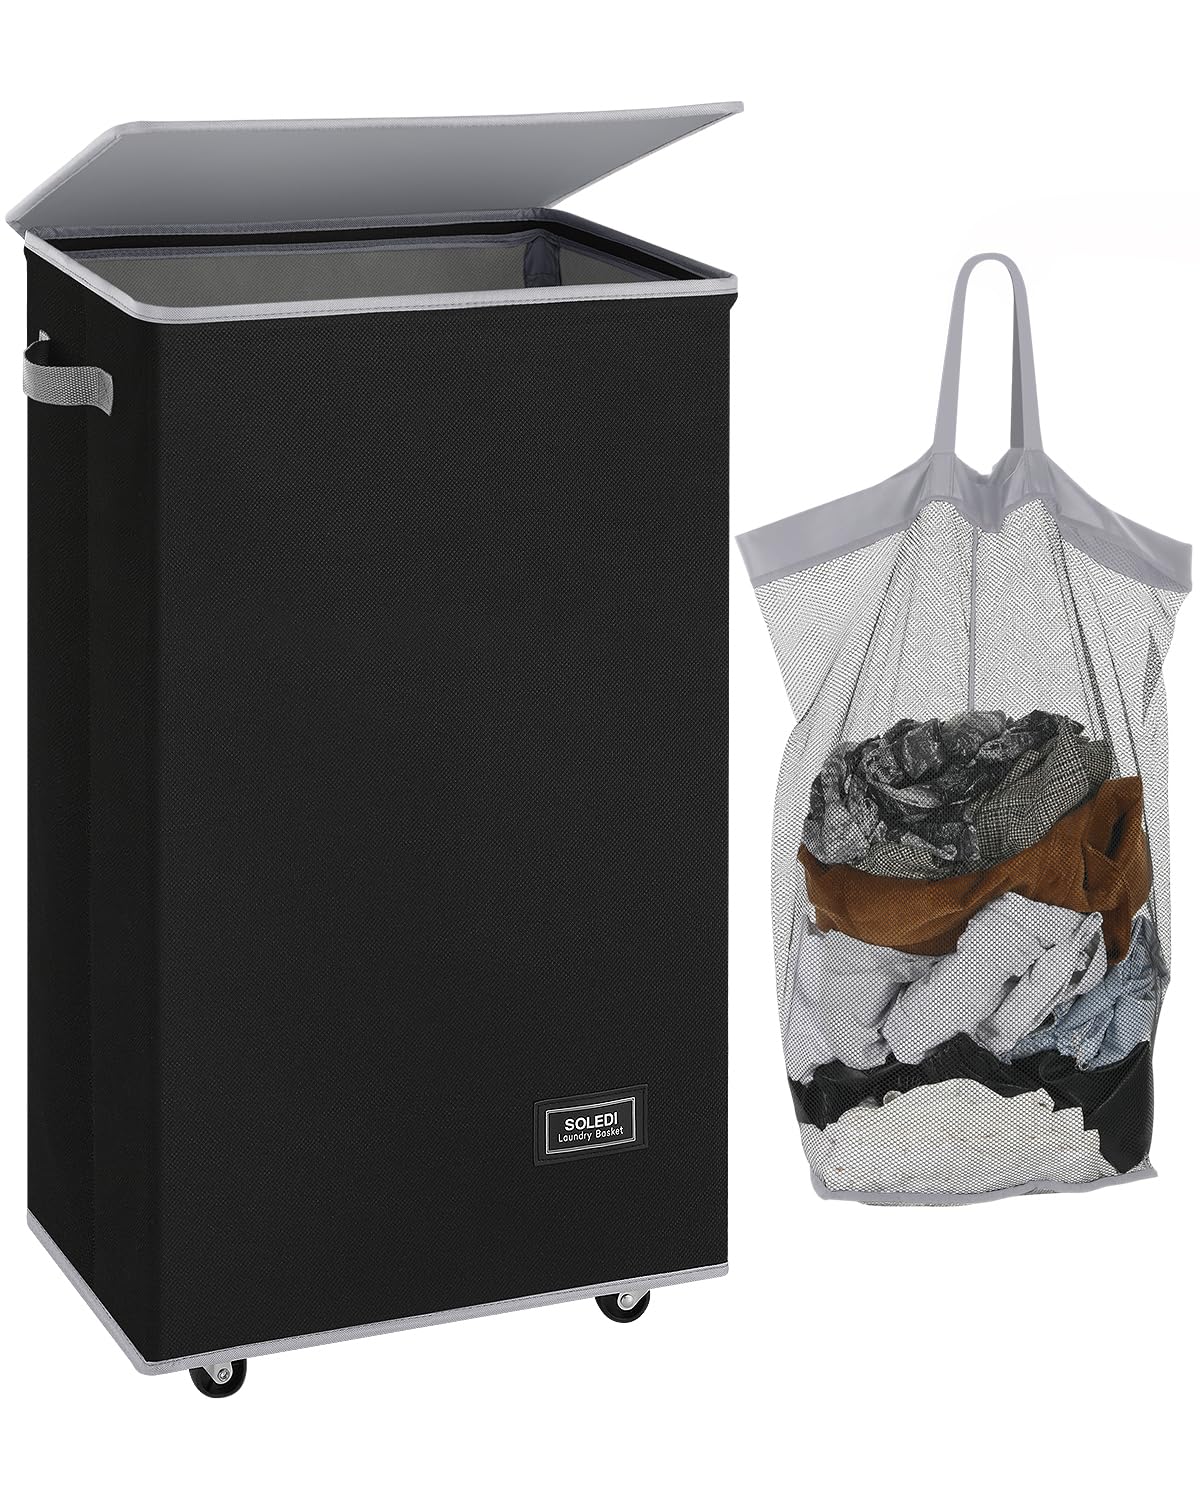 SOLEDI 90L Rolling Laundry Basket Large & Tall(Black)